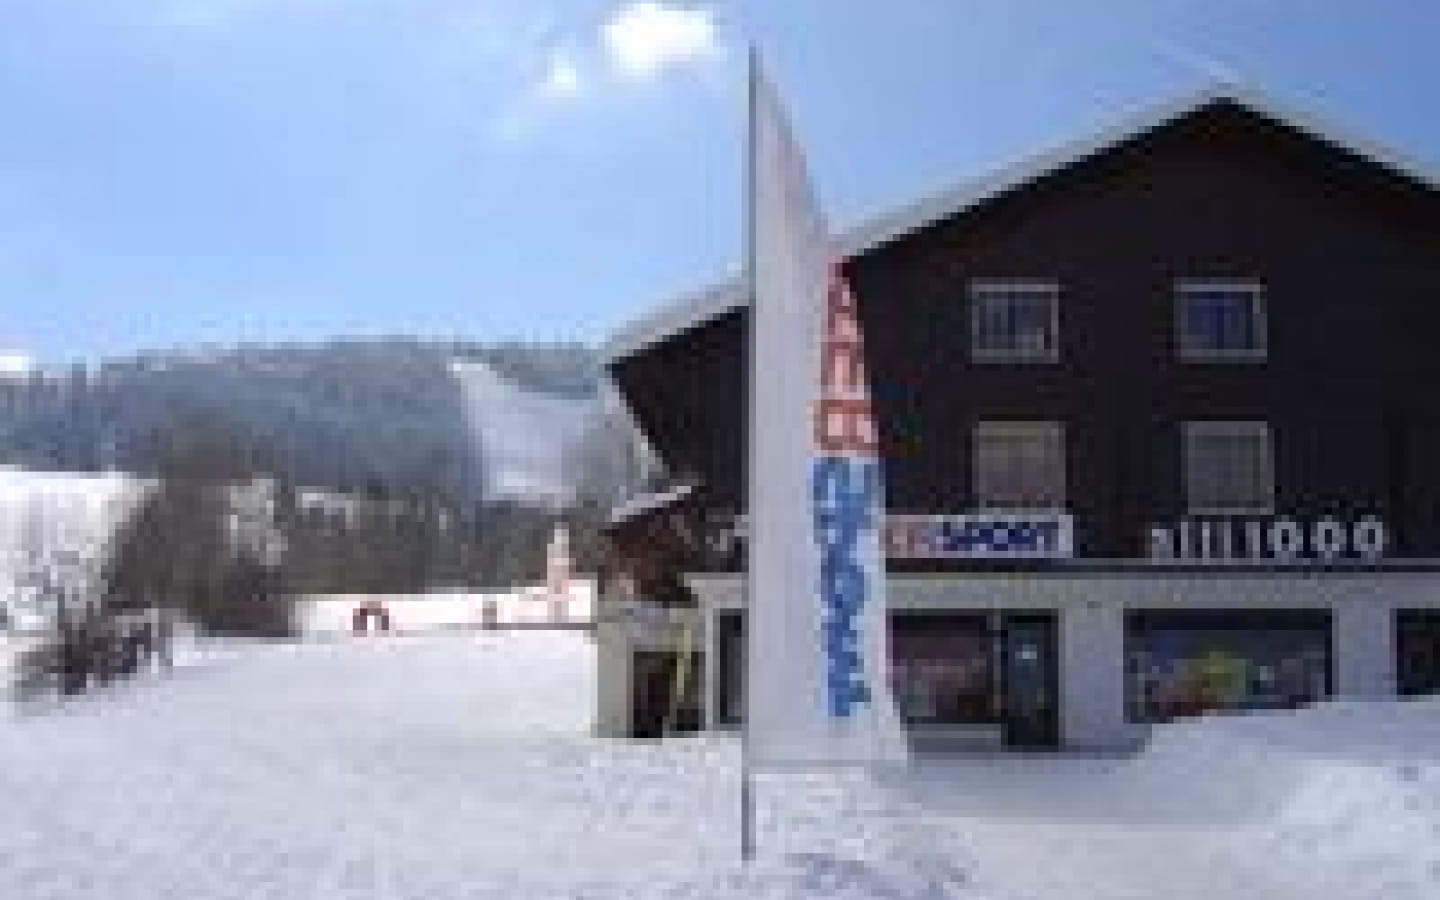 Location de matériel de ski - Intersport Alti 1000